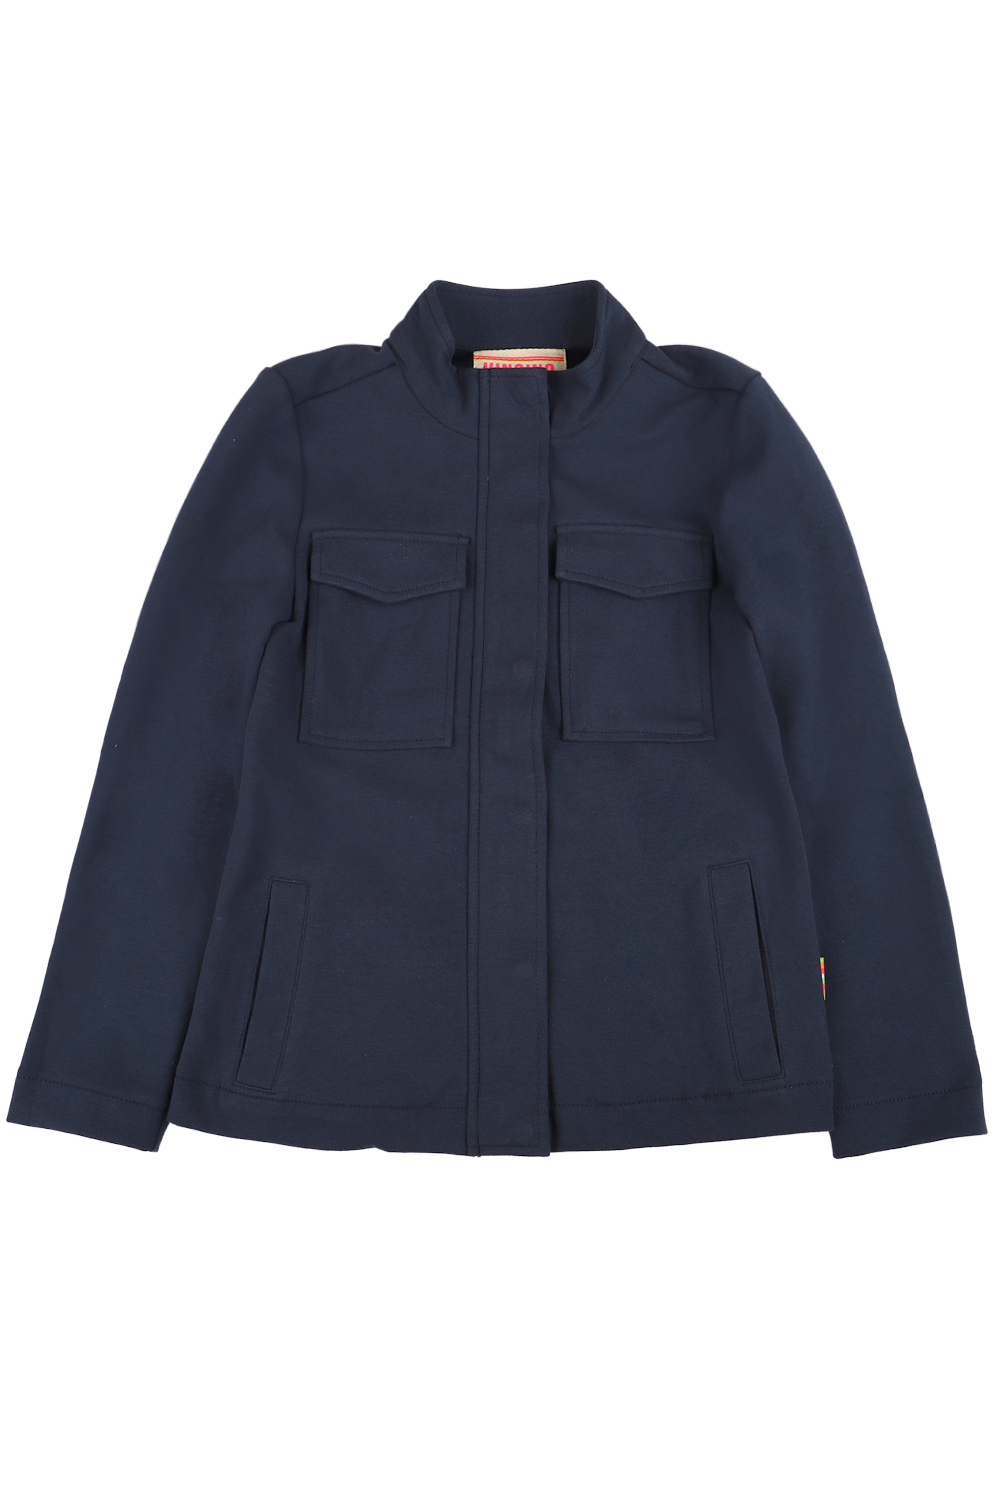 Куртка Vingino, размер 128, цвет синий SS19KGN34802 - фото 1